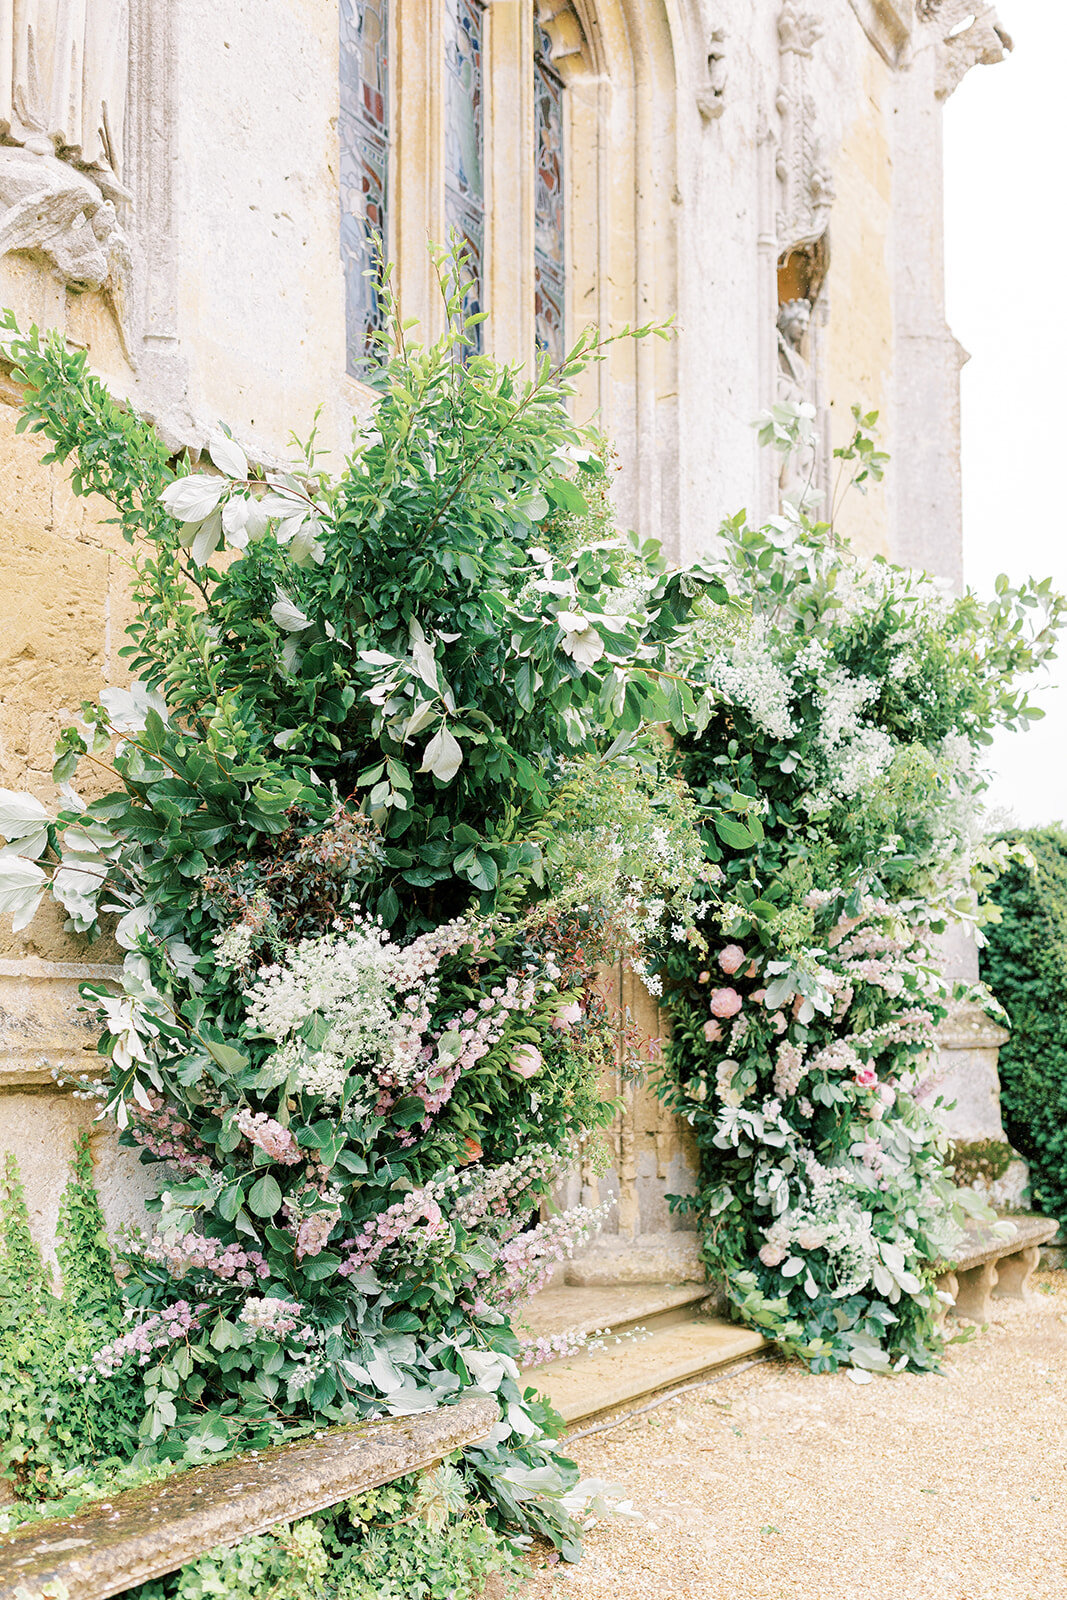 sudeley-castle-church-entrance-wedding-flowers